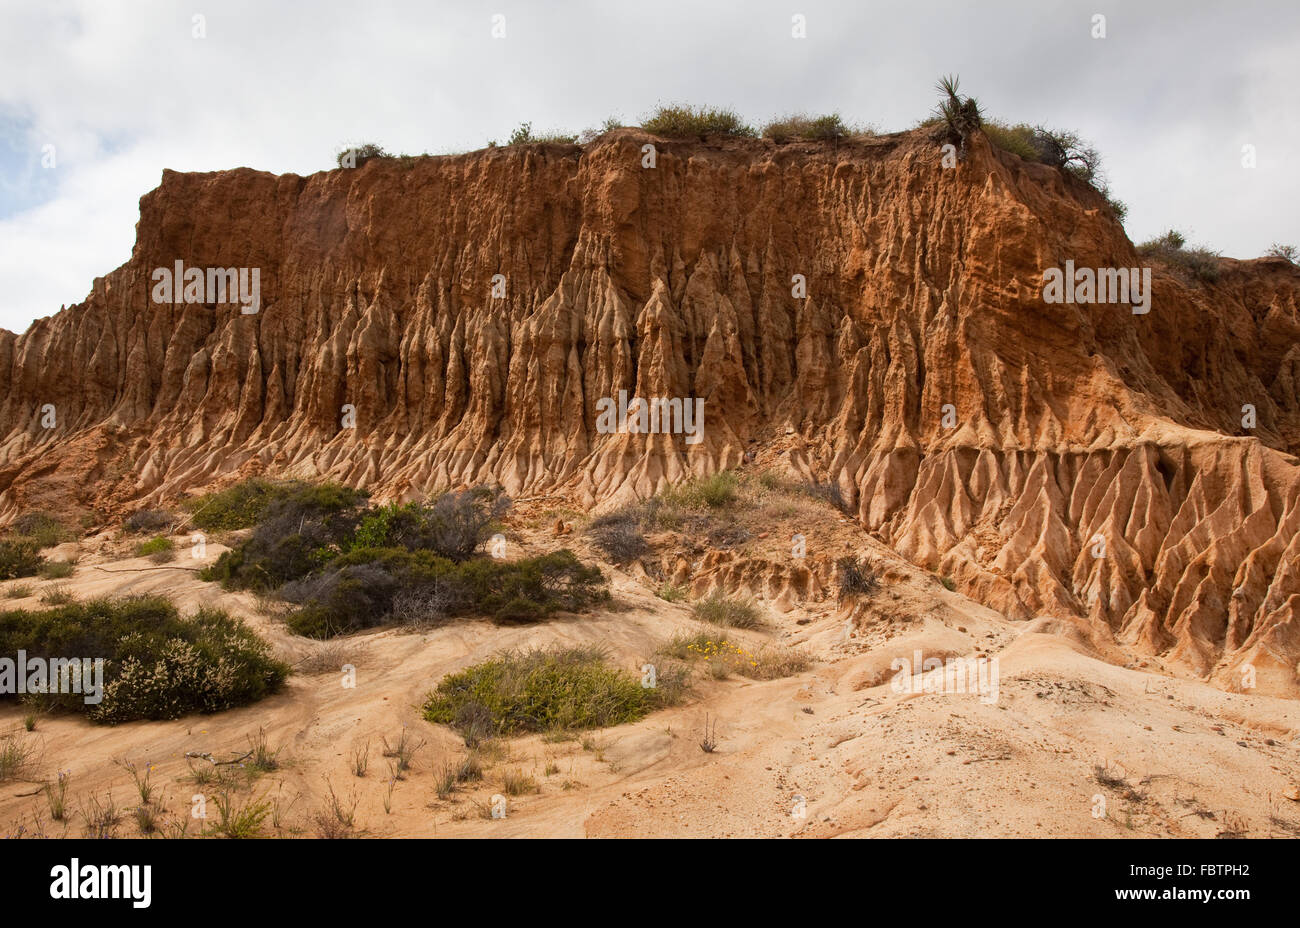 Rugged razor edged erosion in the sandstone on Torrey Pines hillside Stock Photo